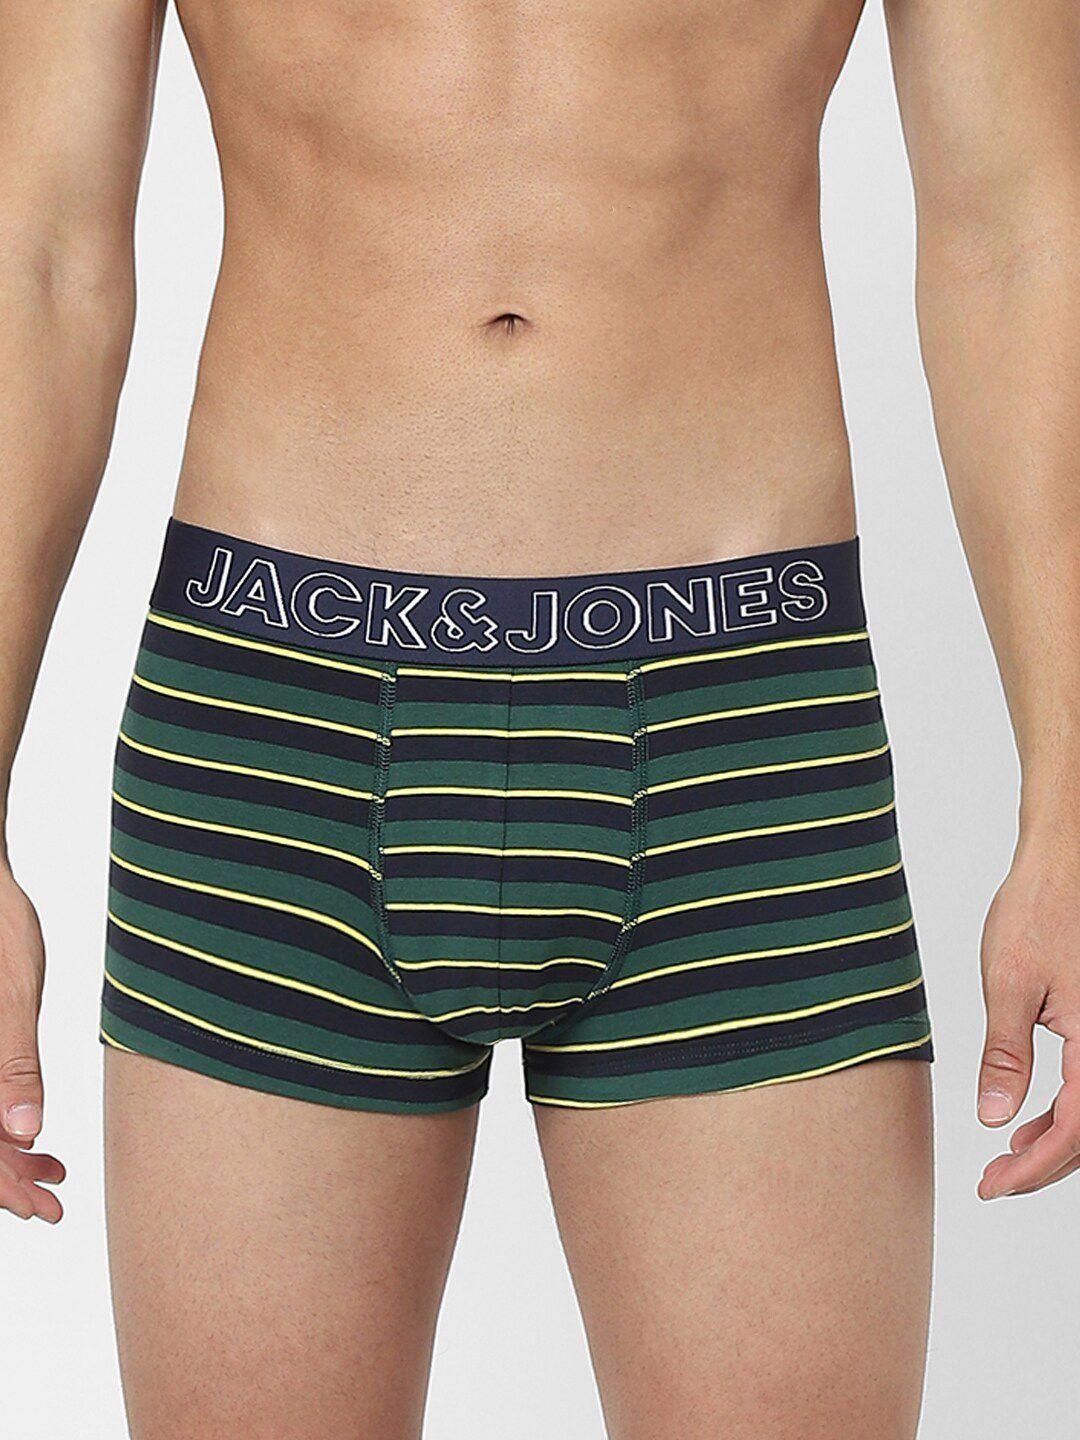 jack & jones men green & black printed cotton trunk 116798801